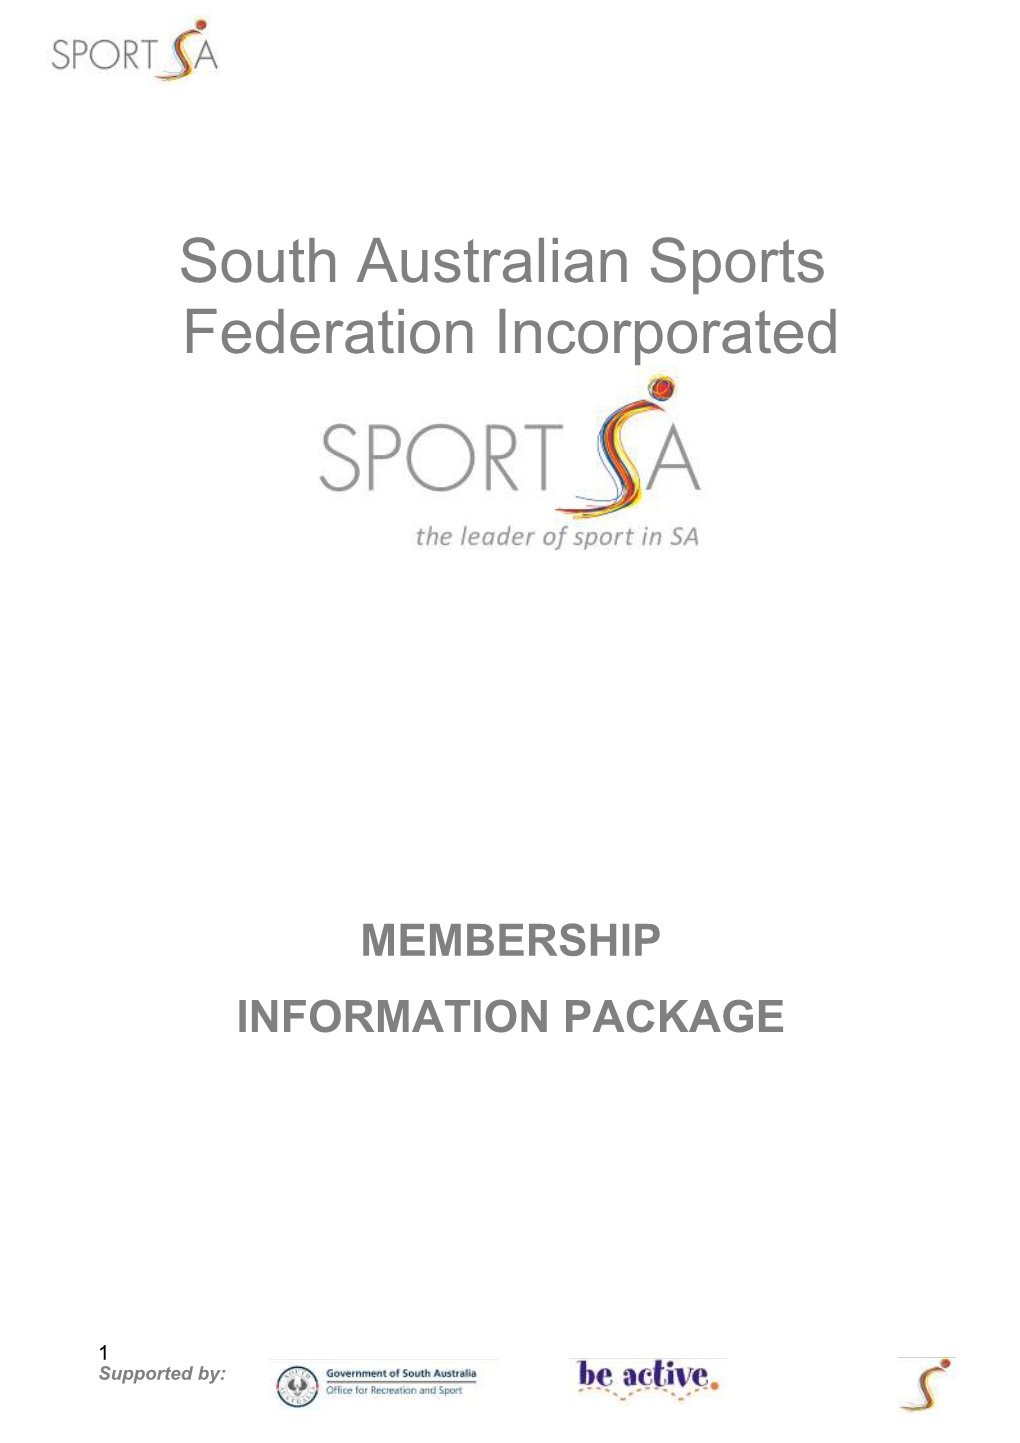 South Australian Sports Federation Inc